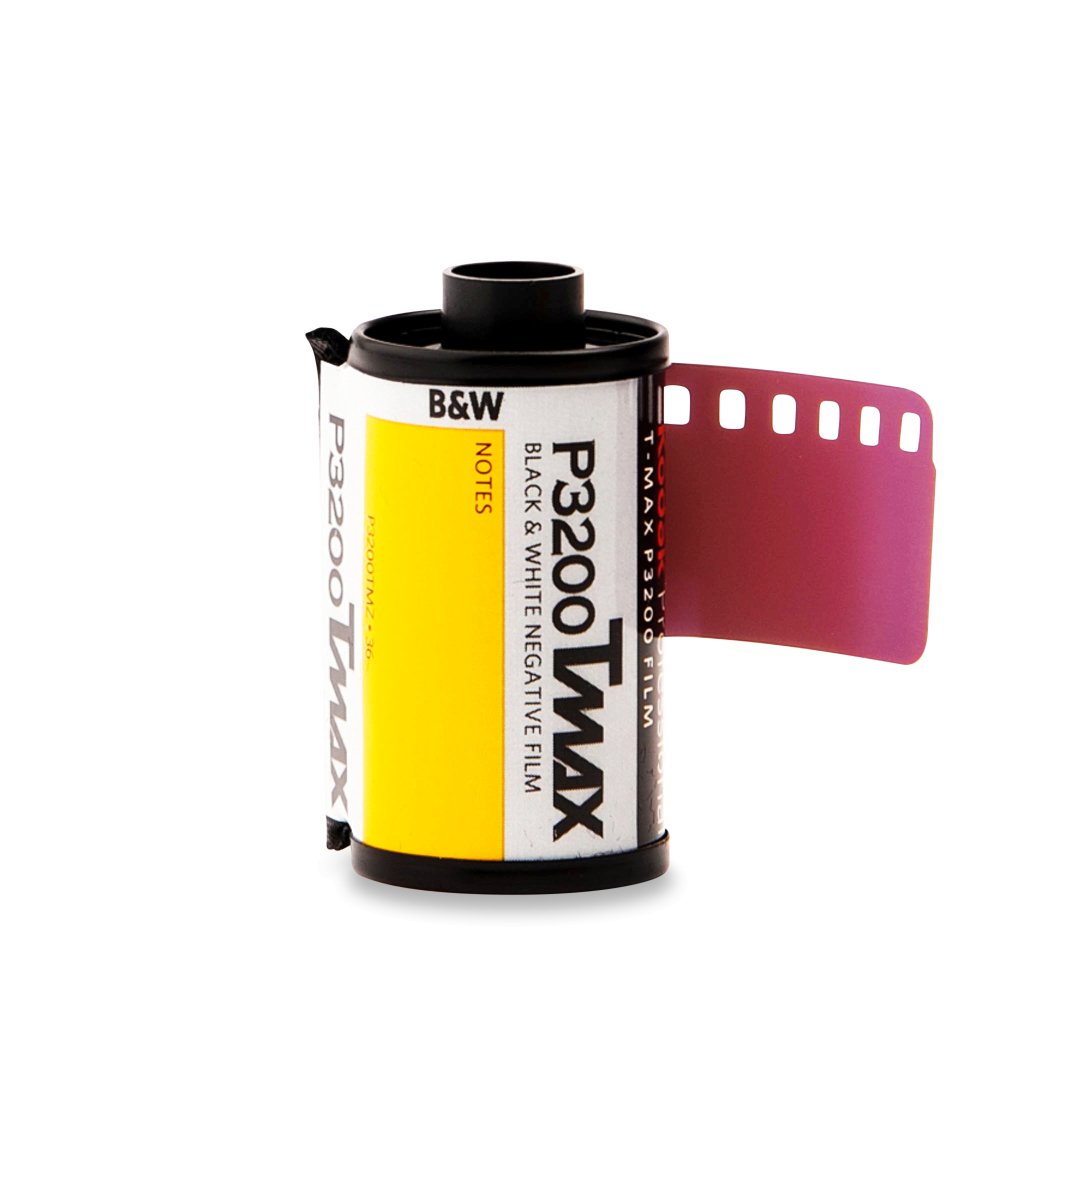 Kodak T-Max P3200 - 35mm - 36 Exposure - Single Roll